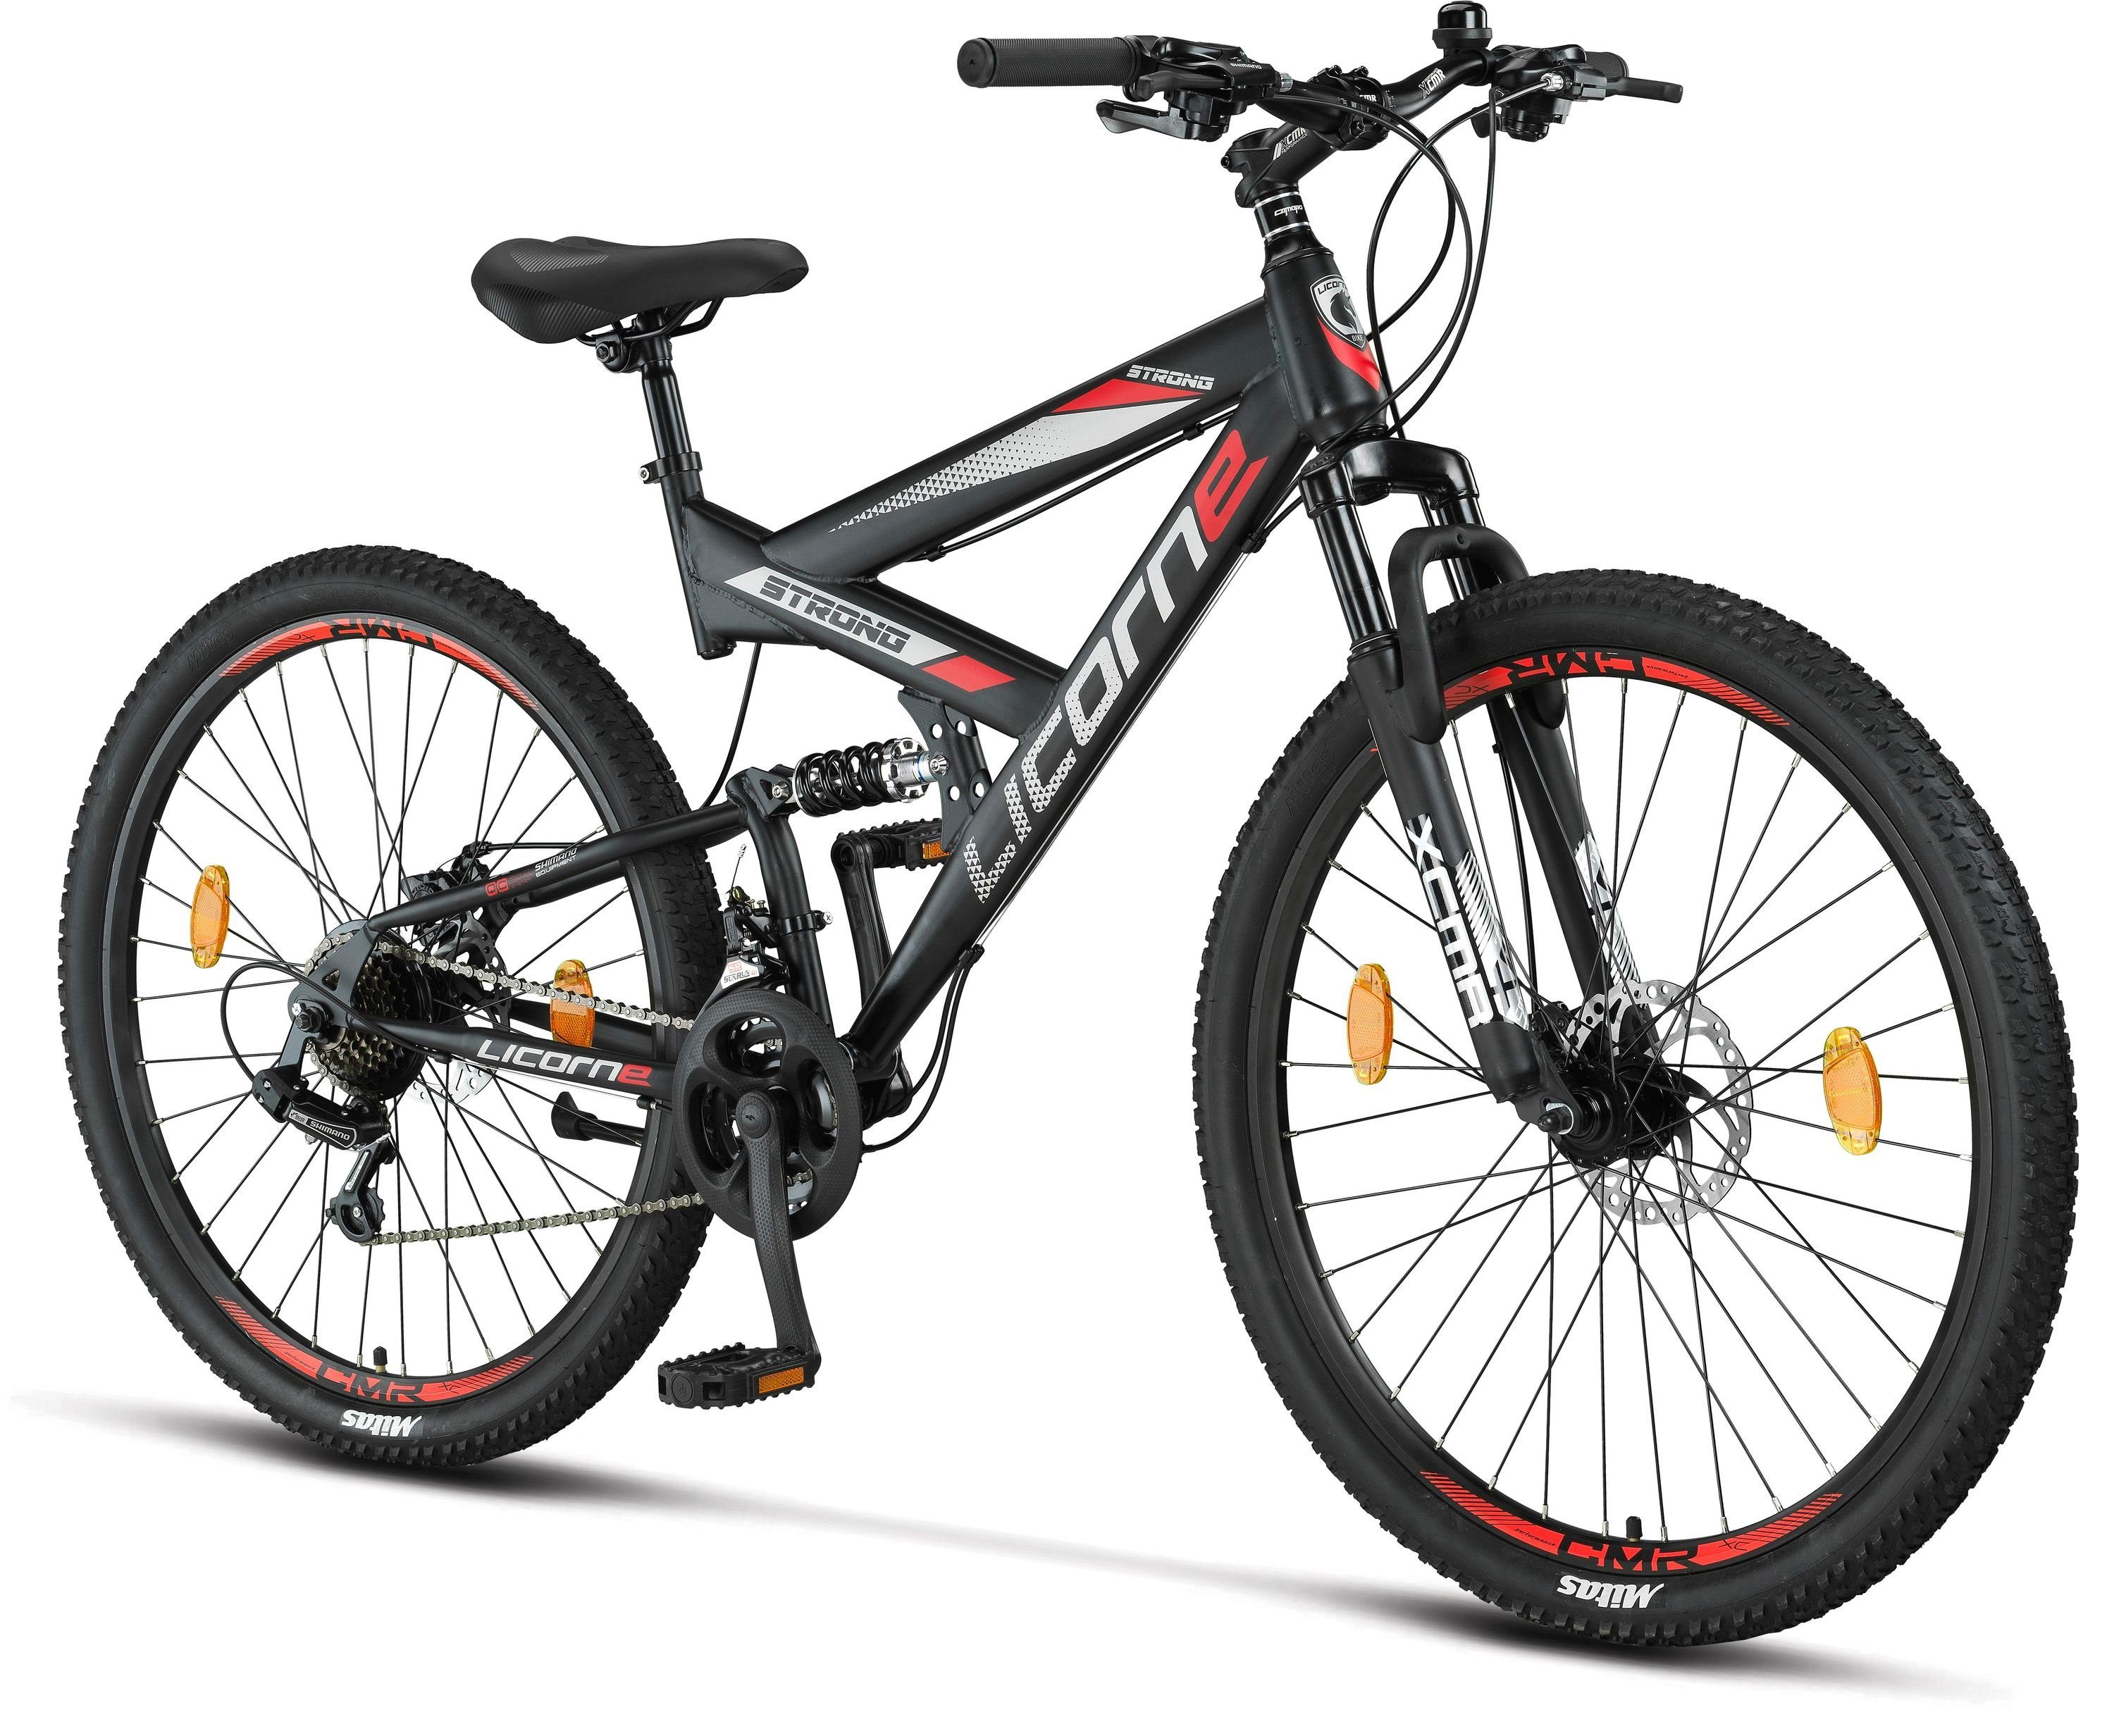 Mountainbike Bike 27,5 und Licorne Bike Zoll 26, Premium 29 Mountainbike Licorne 2D Strong Schwarz/Rot in